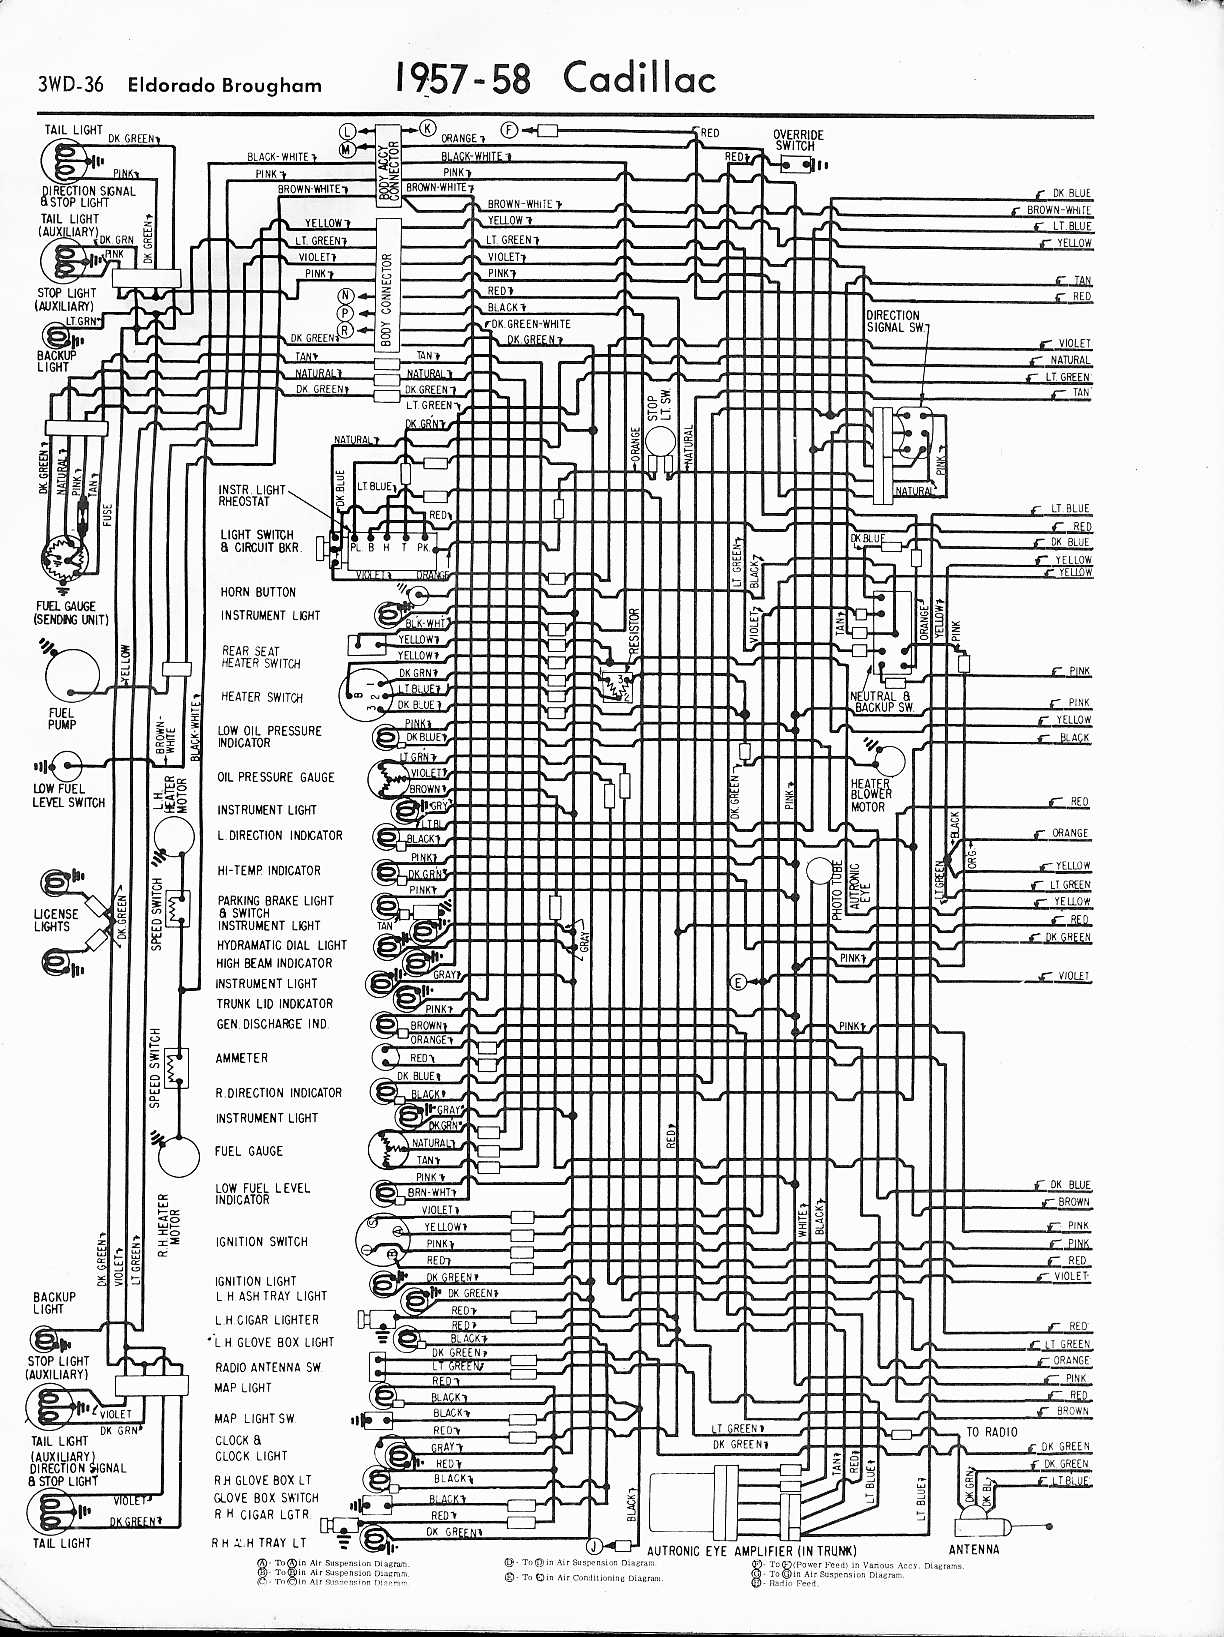 Cadillac Wiring Diagrams: 1957-1965 1973 cadillac wiring schematics 